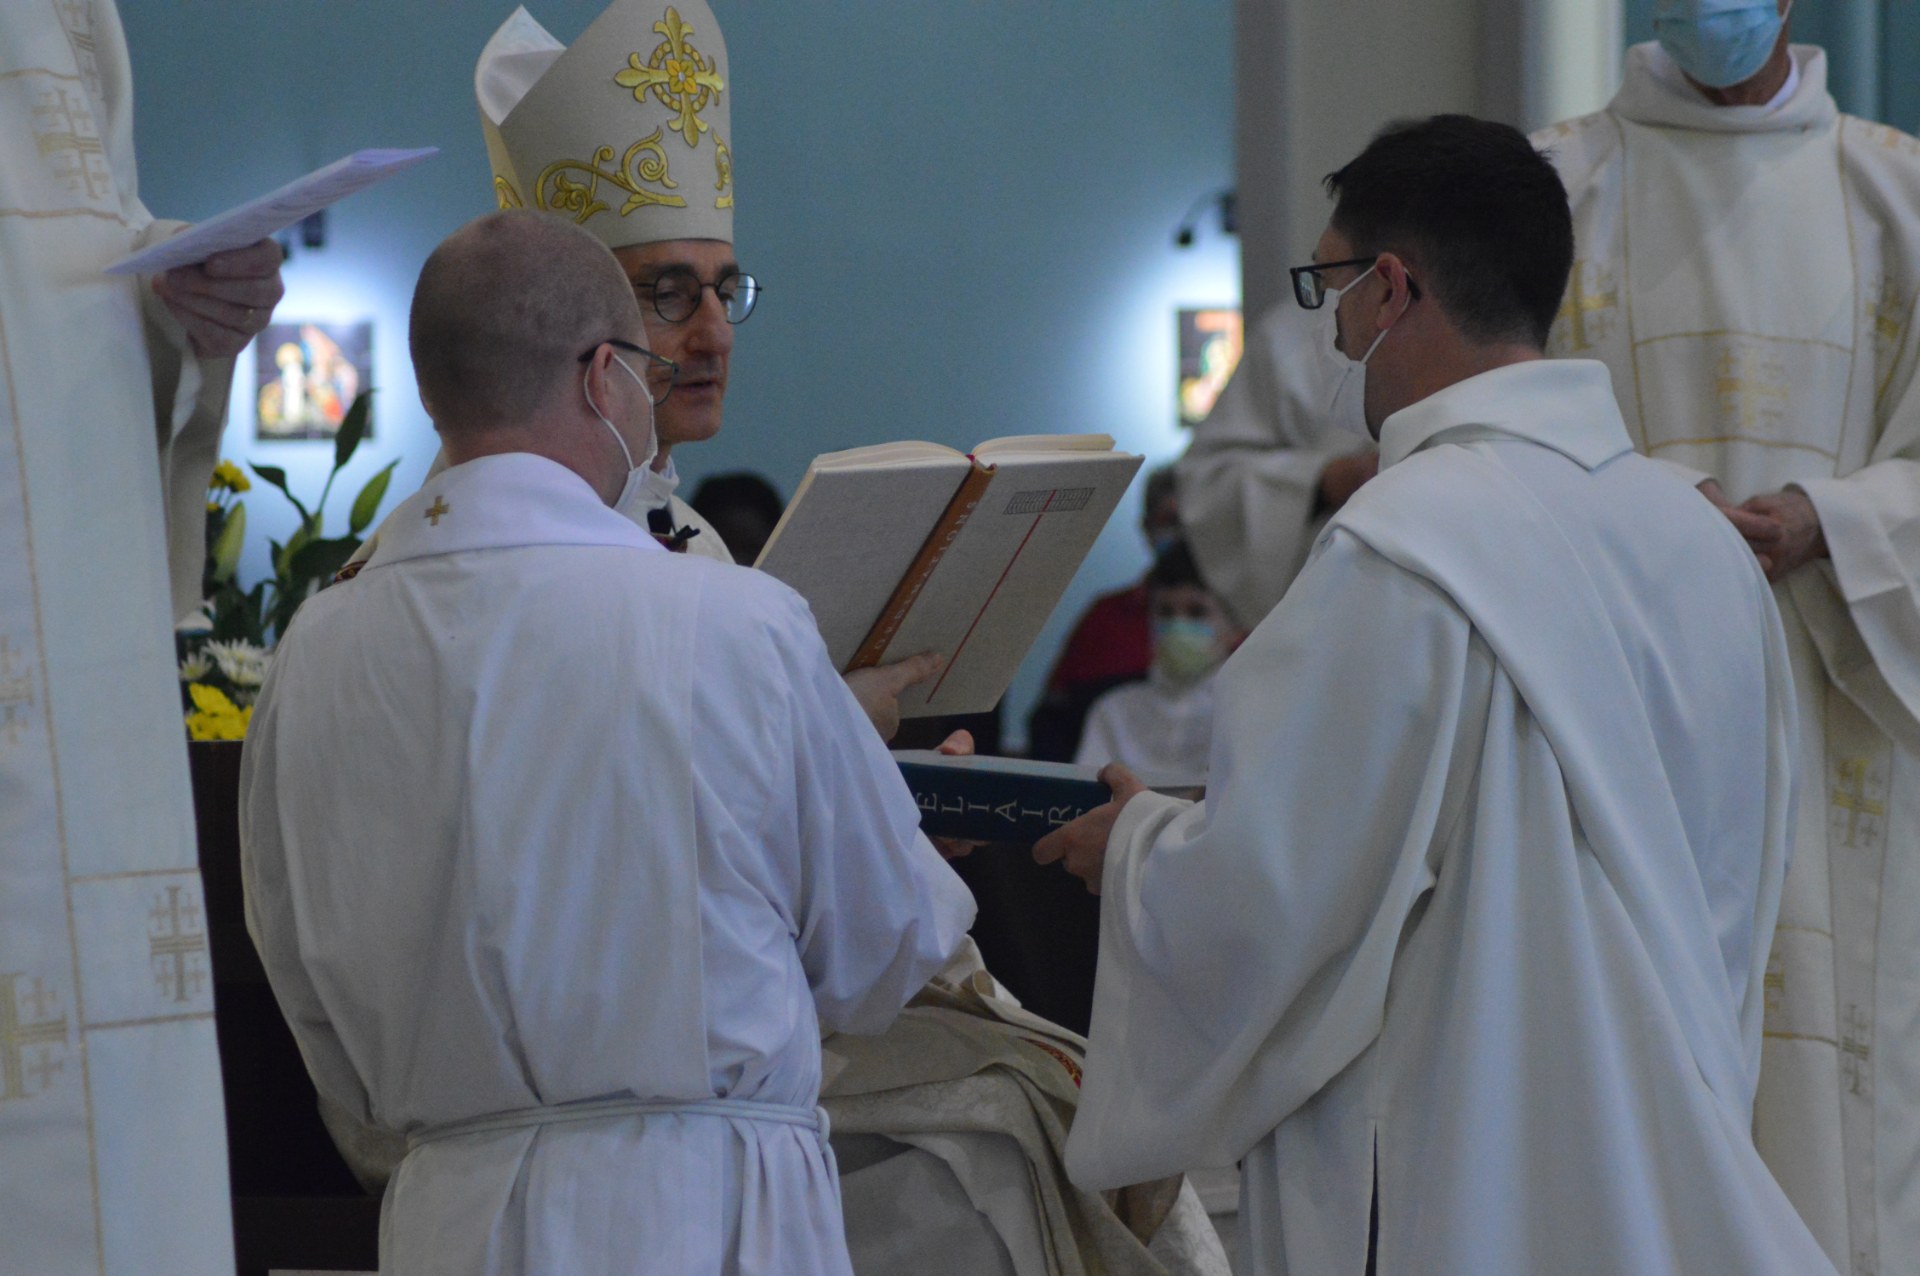 ordinations diaconales Maubeuge 2021 8